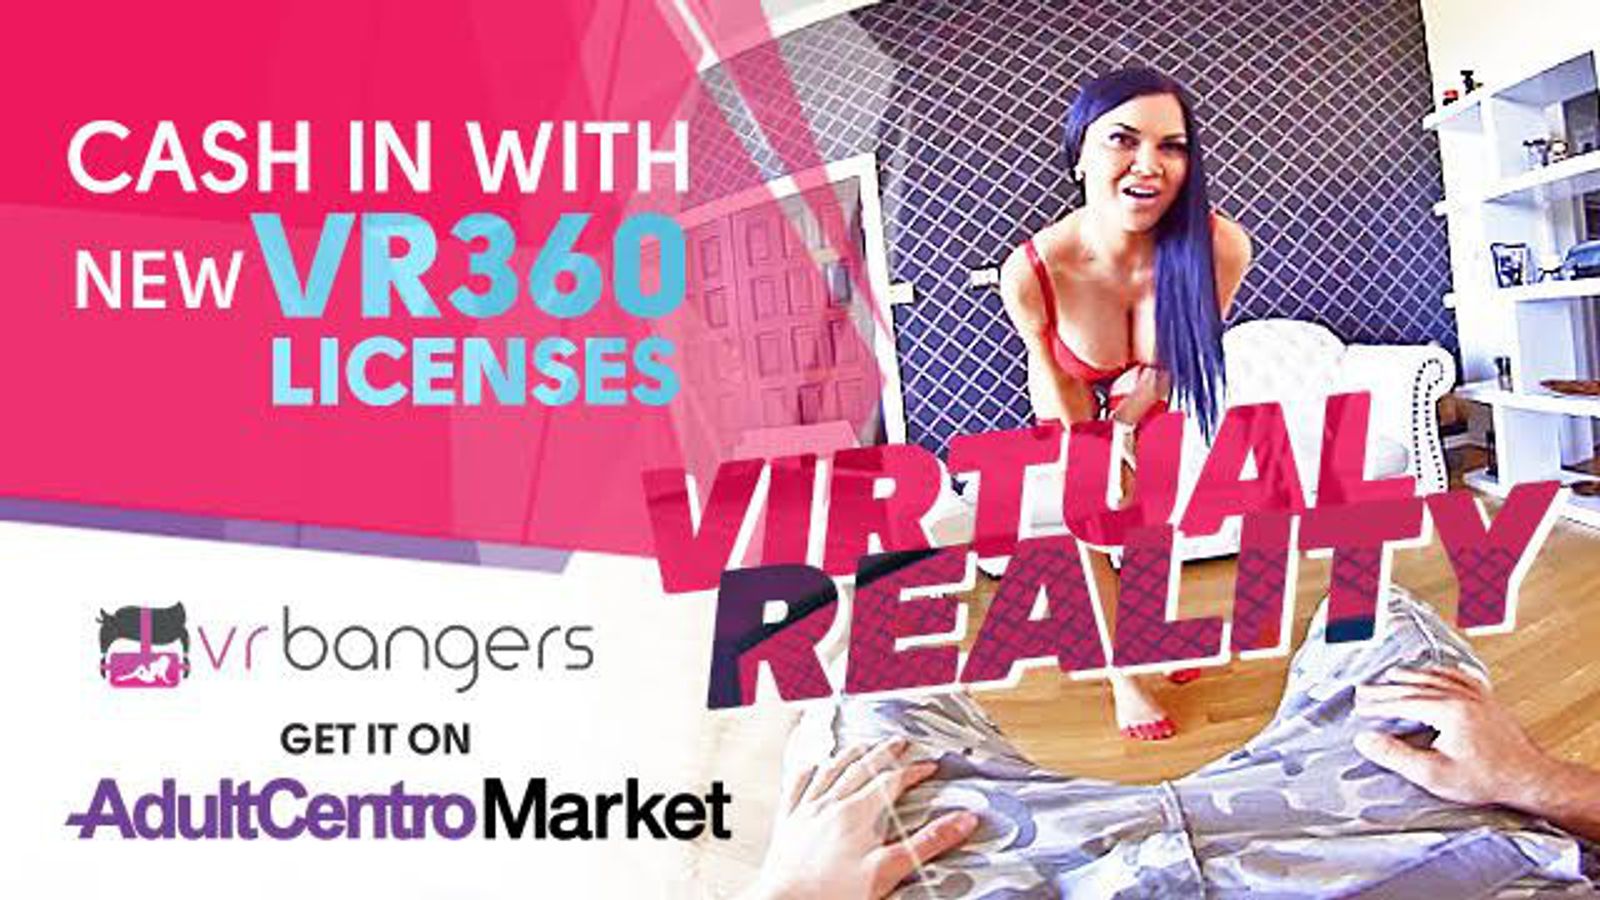 AdultCentro Market Introduces VR Content